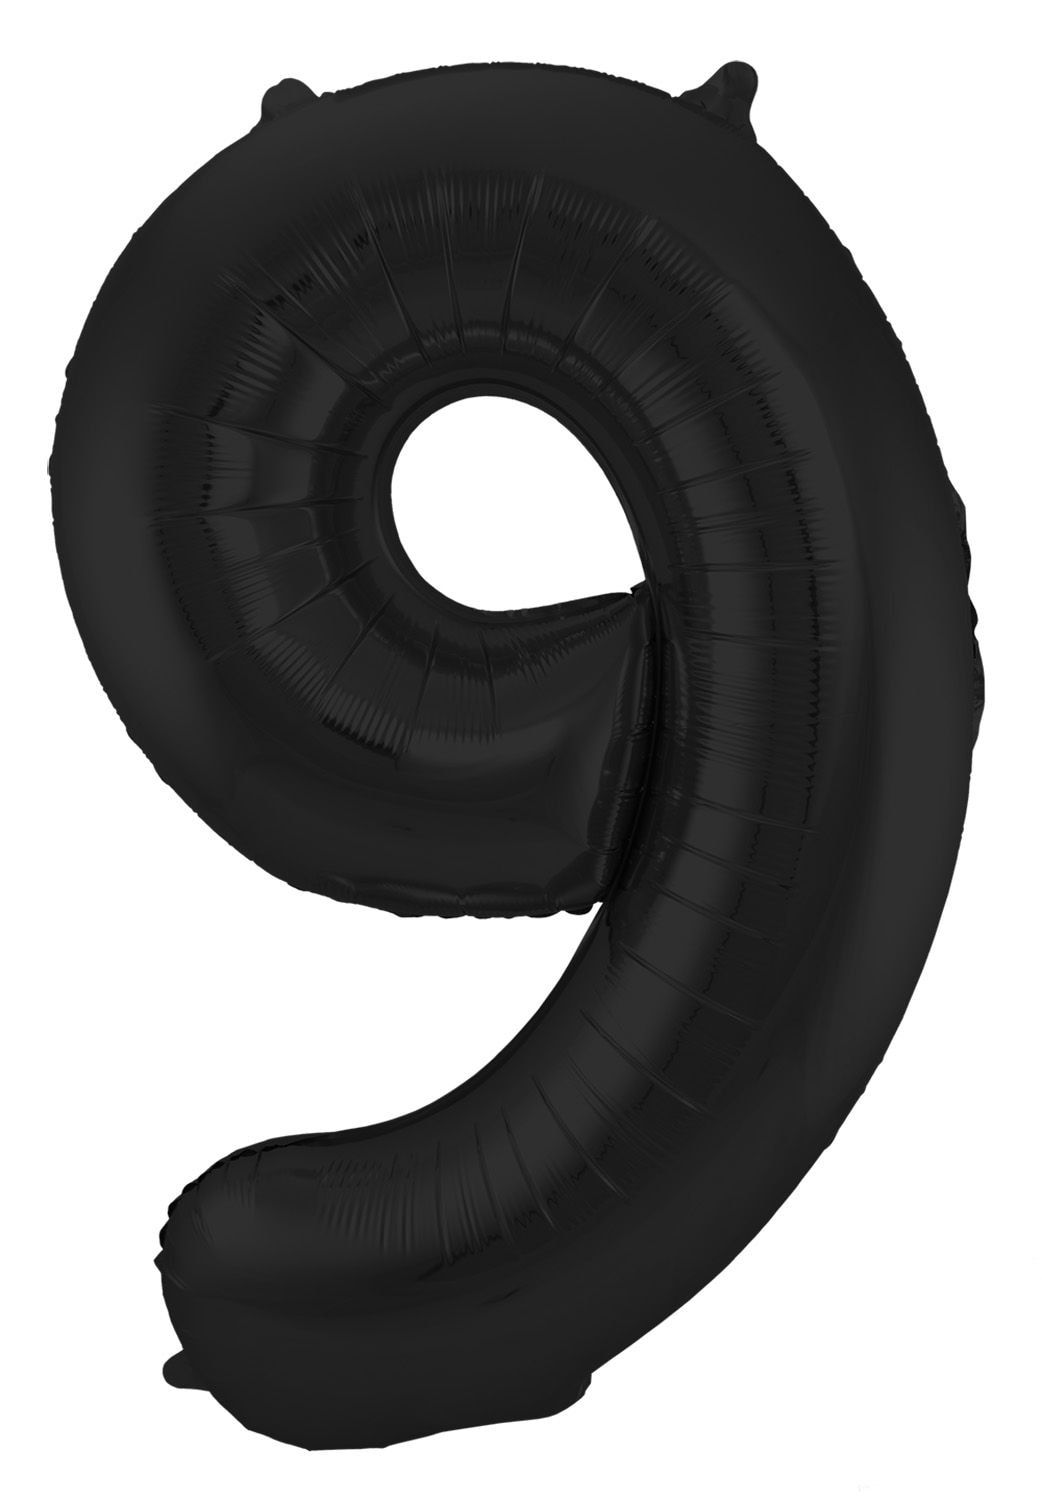 Cijfer 9 metallic zwart folieballon 86cm